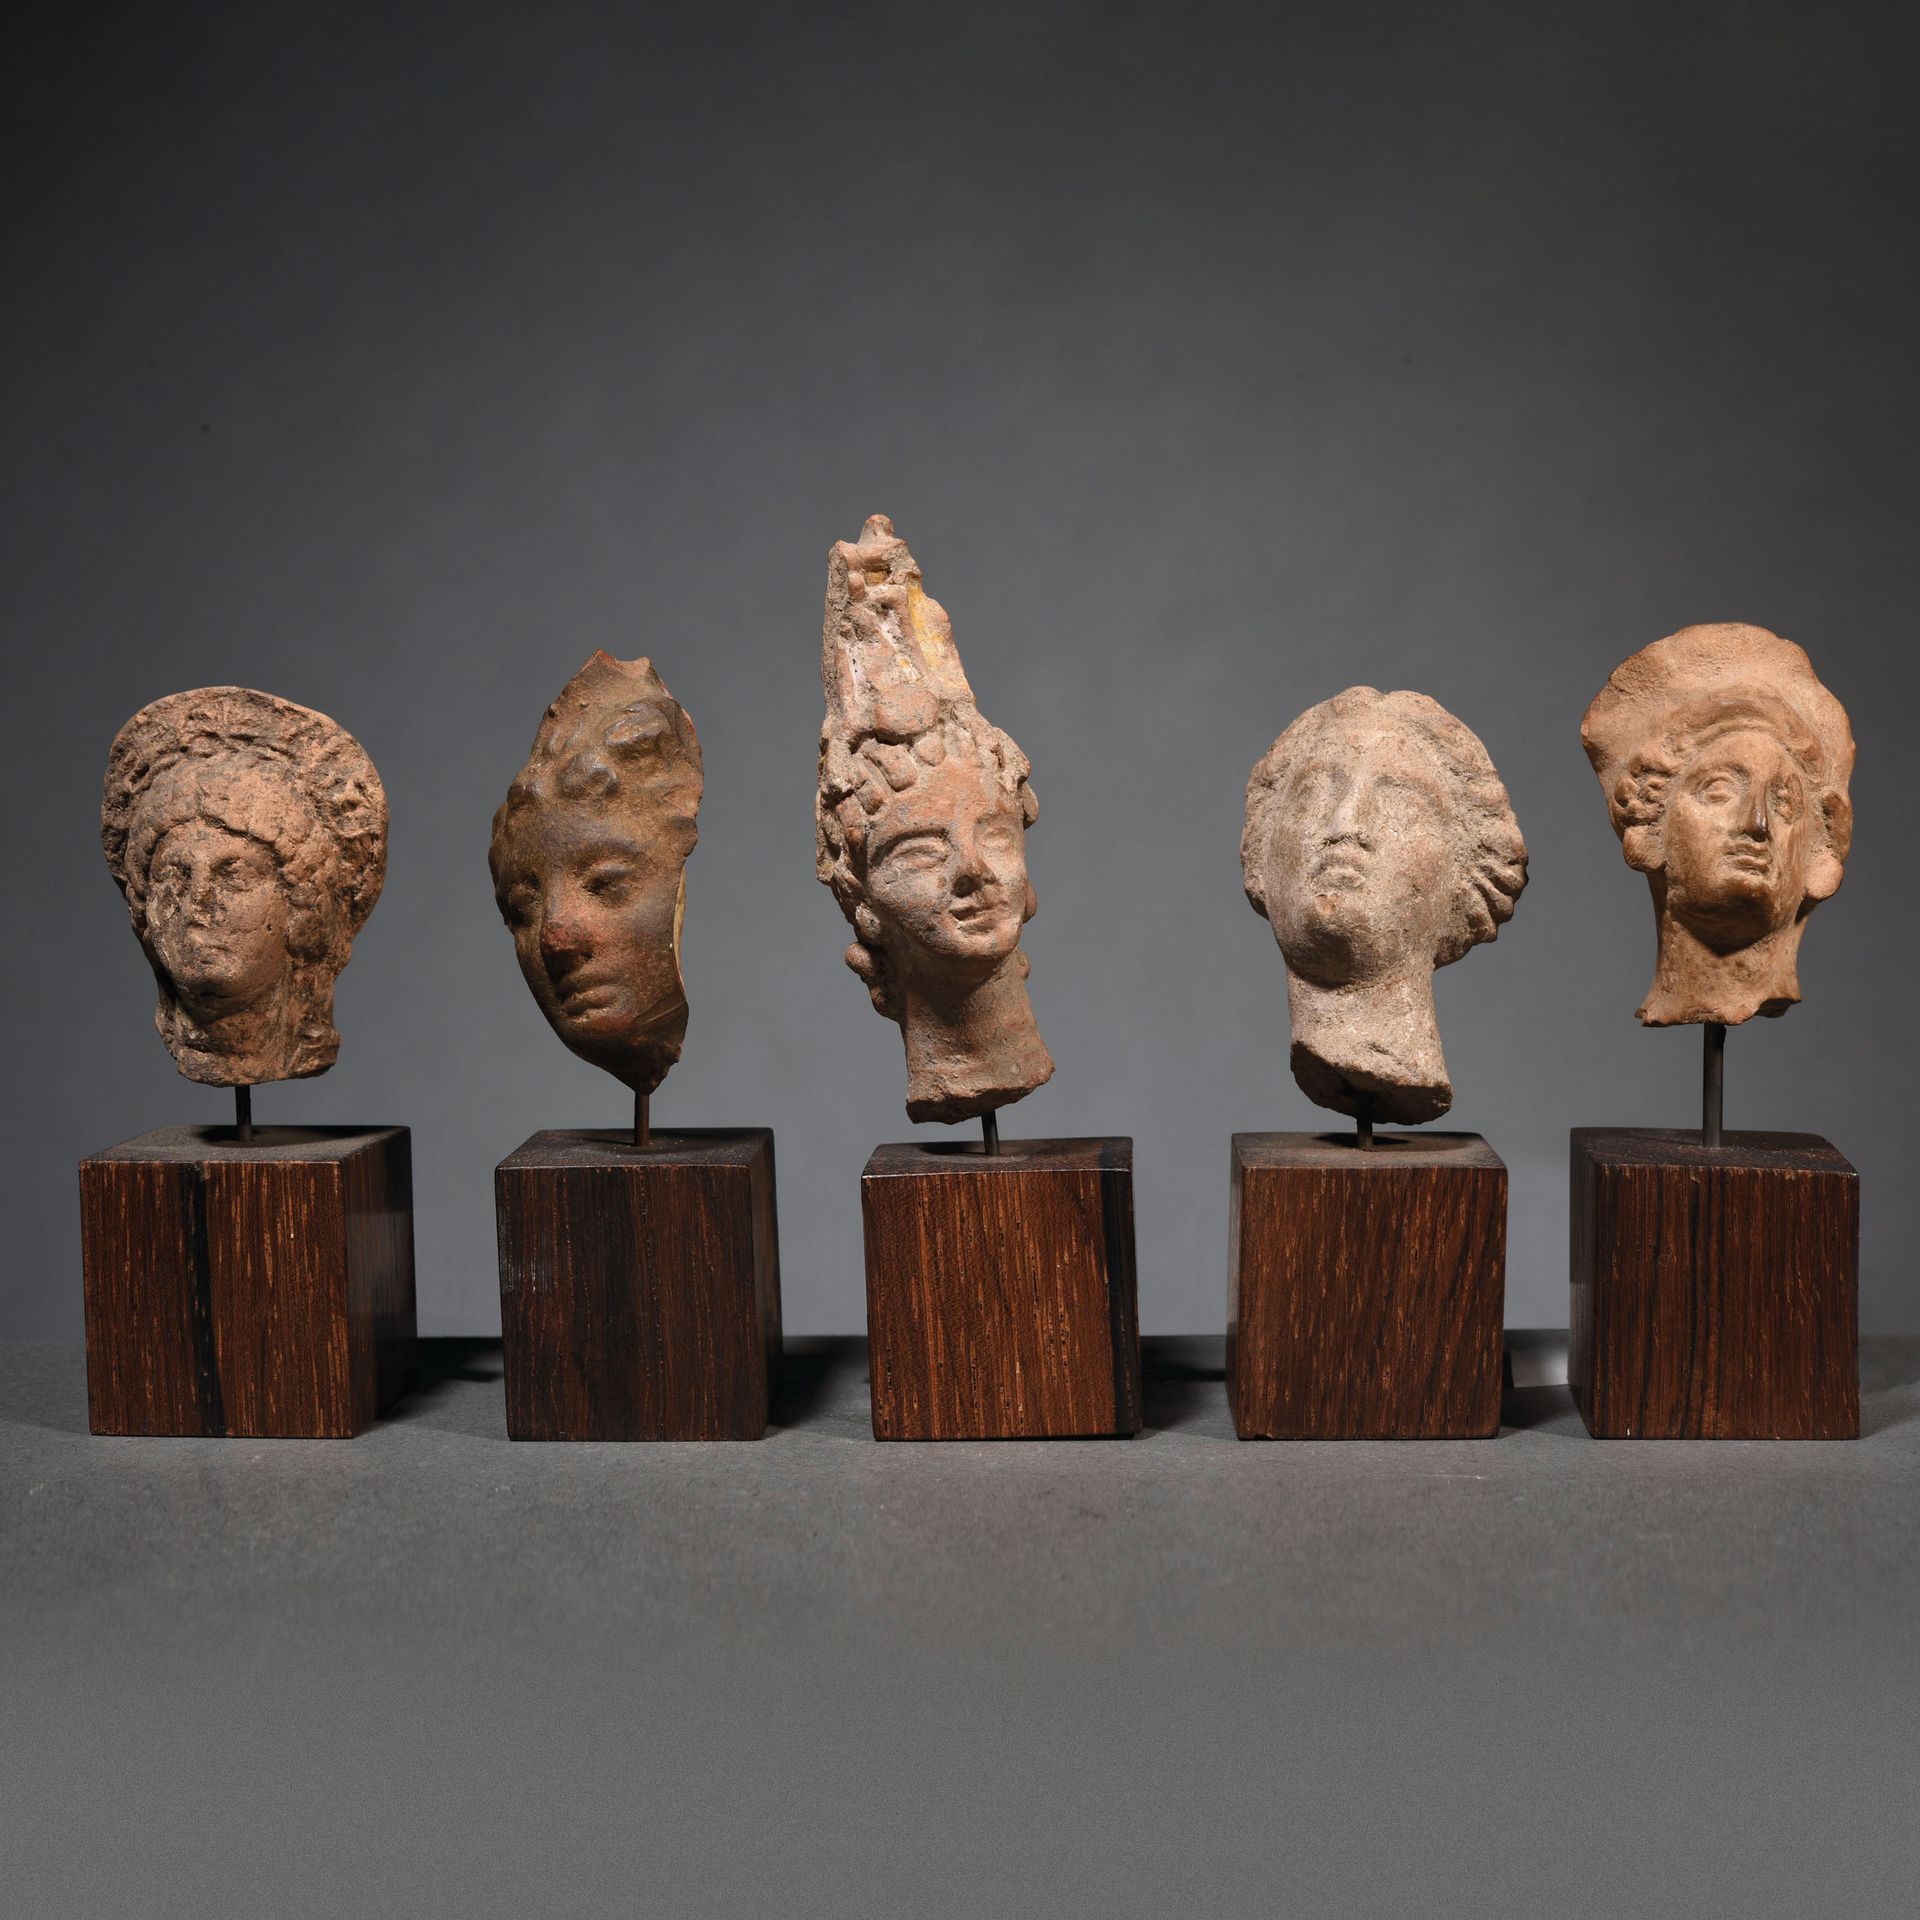 Null 一套5个女性前头像

希腊化的艺术

在陶土中



出处

前L先生的收藏，1980年代。



一组5个希腊化的陶器前头像。